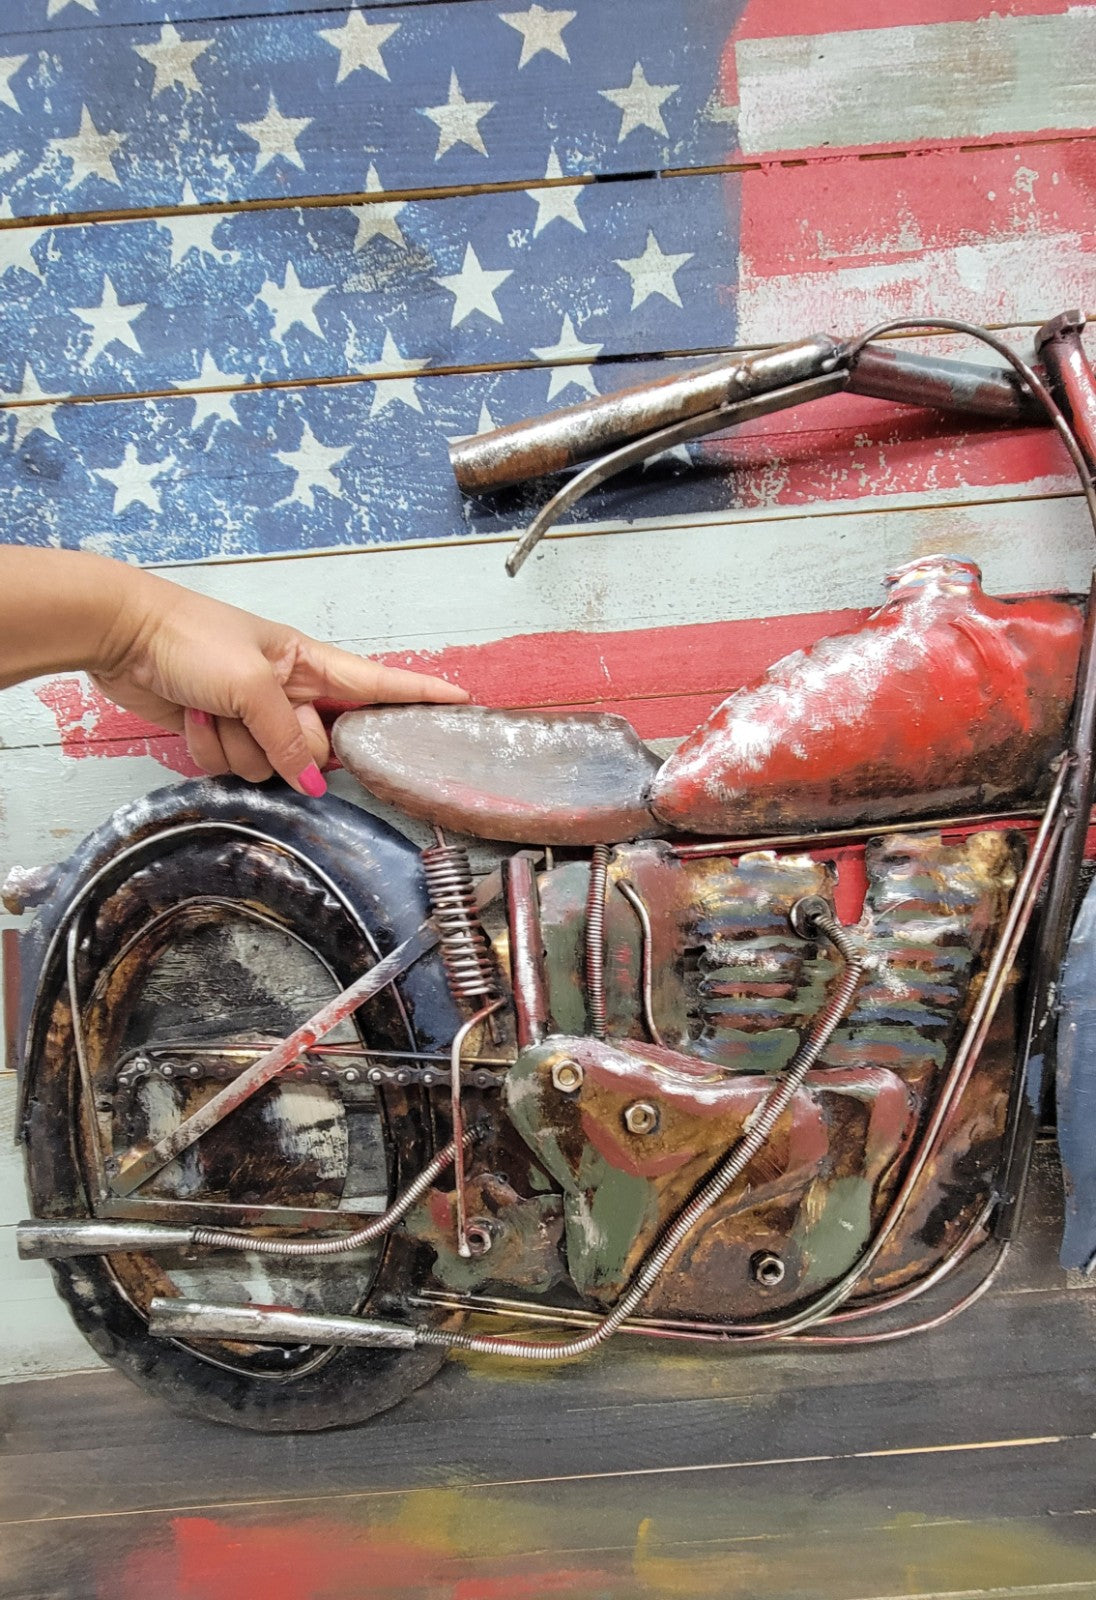 "Motorcycle 1" Harley Davidson Mixed Media Hand Painted Iron Wall Sculpture